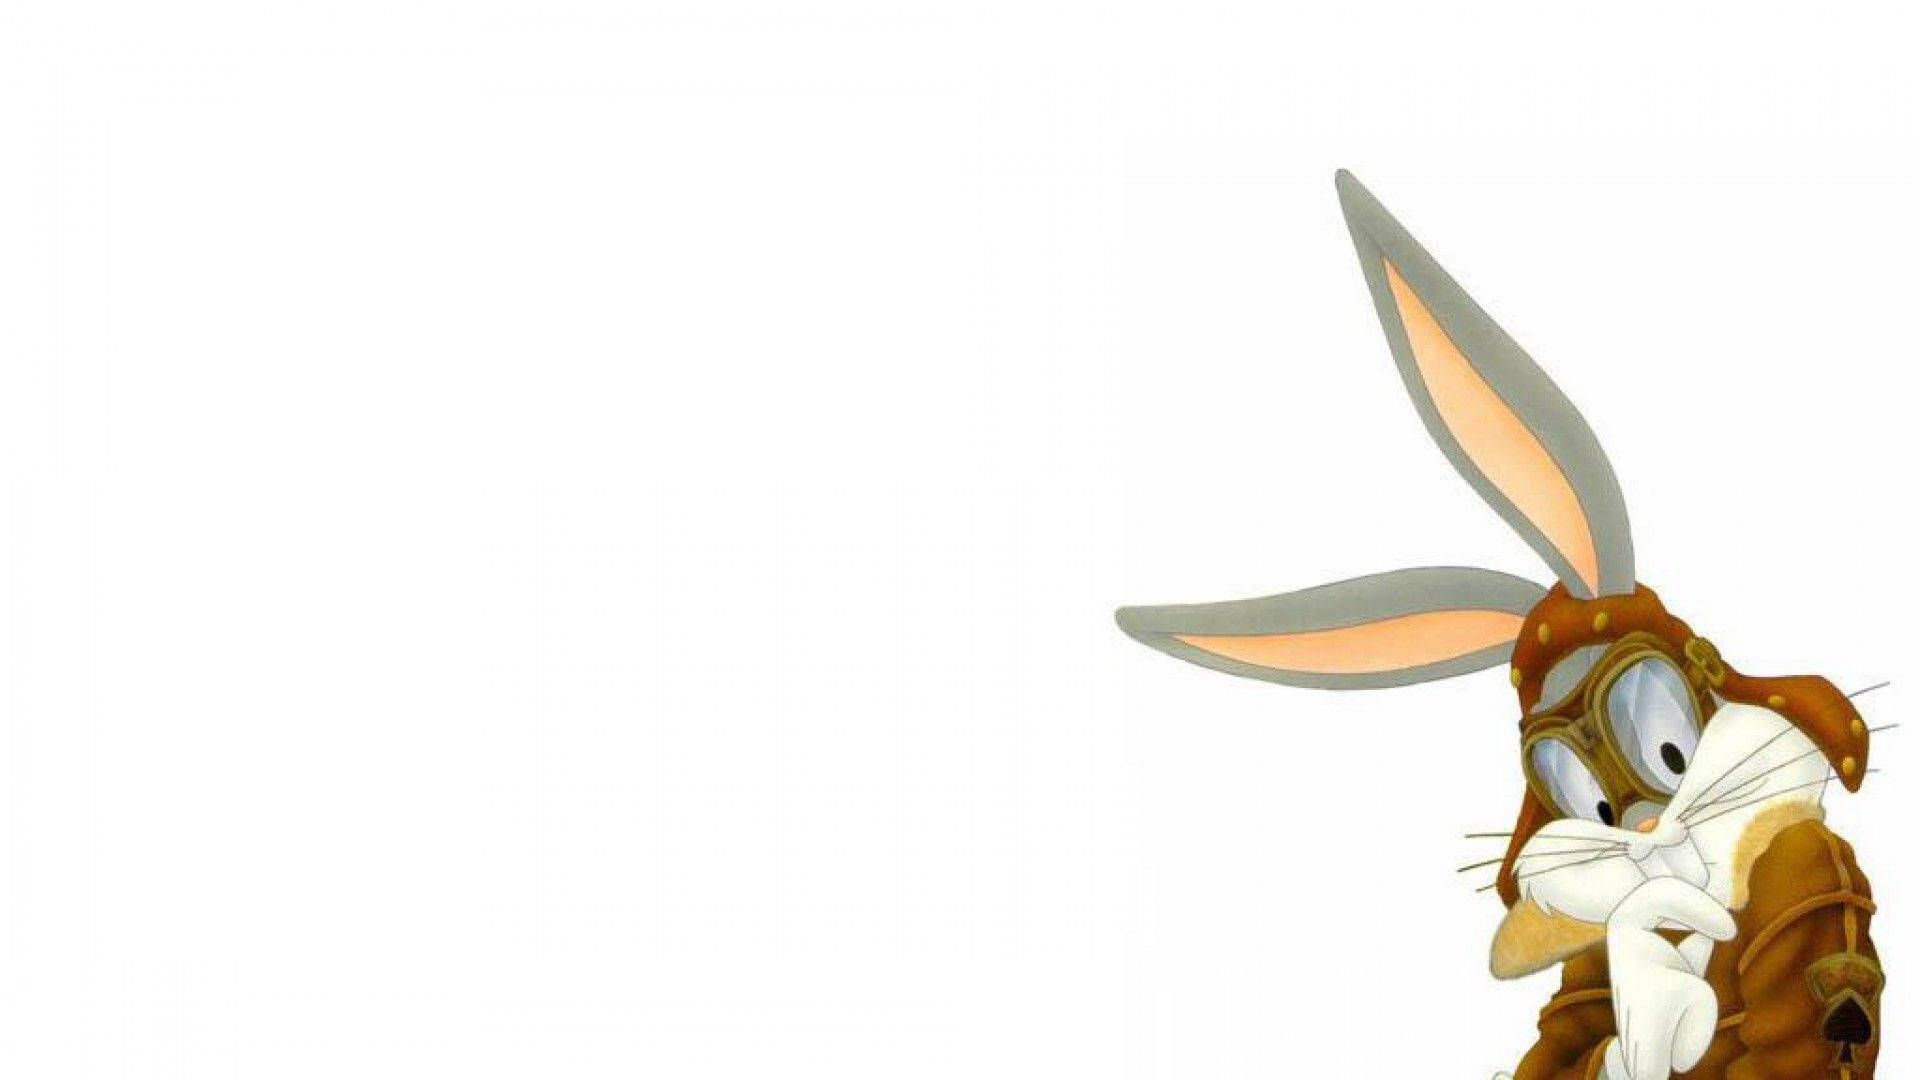 A cartoon rabbit with big ears and brown fur - Bugs Bunny